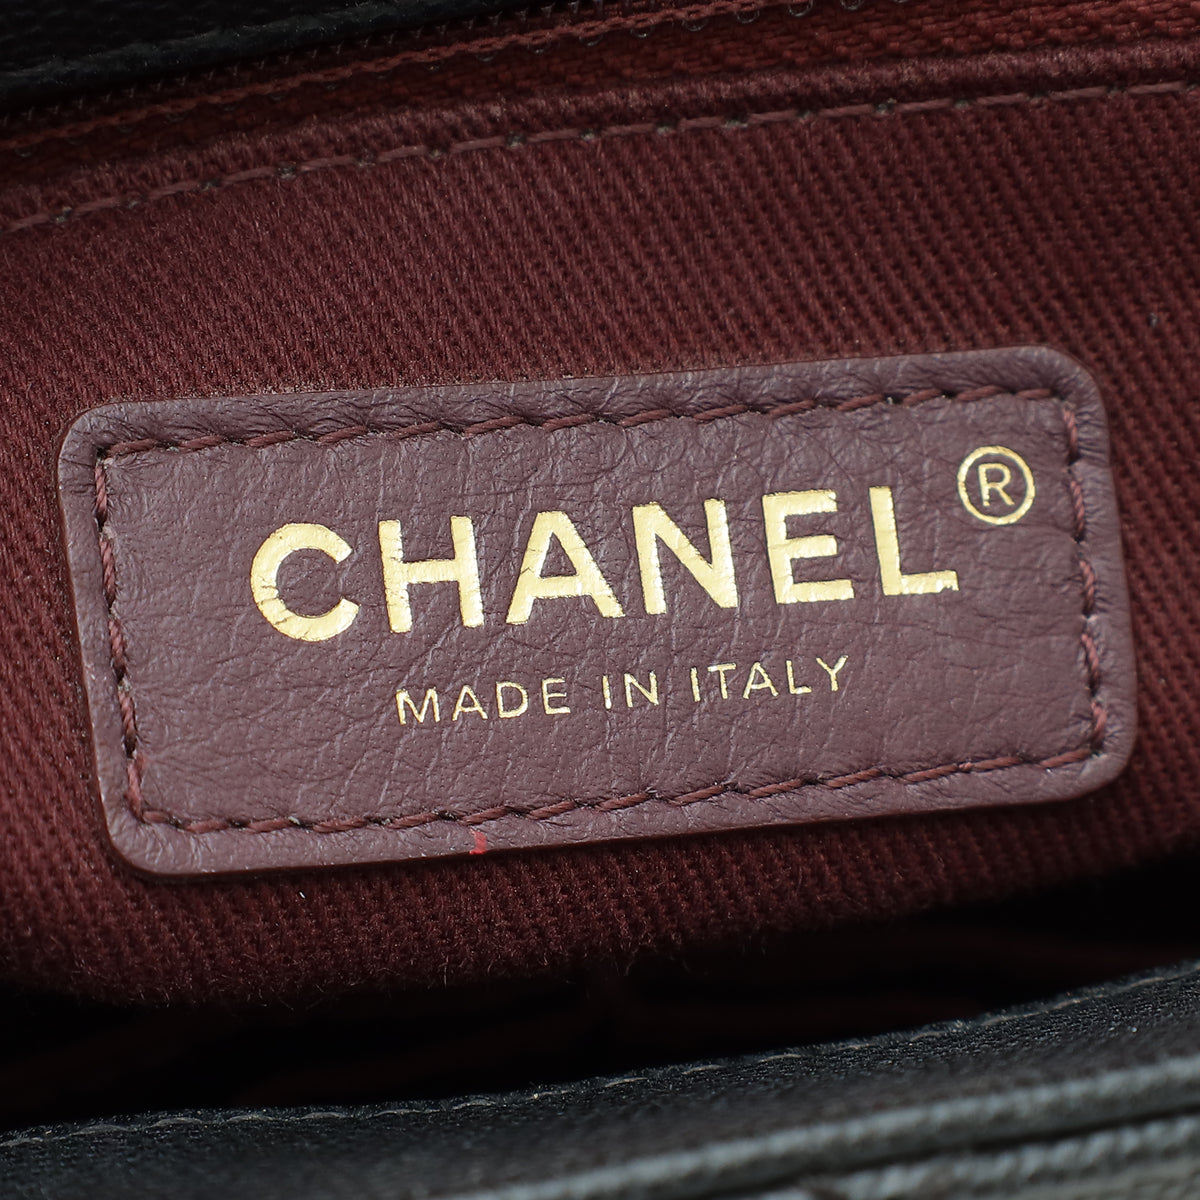 Chanel Black CC Coco Handle Small Flap Bag